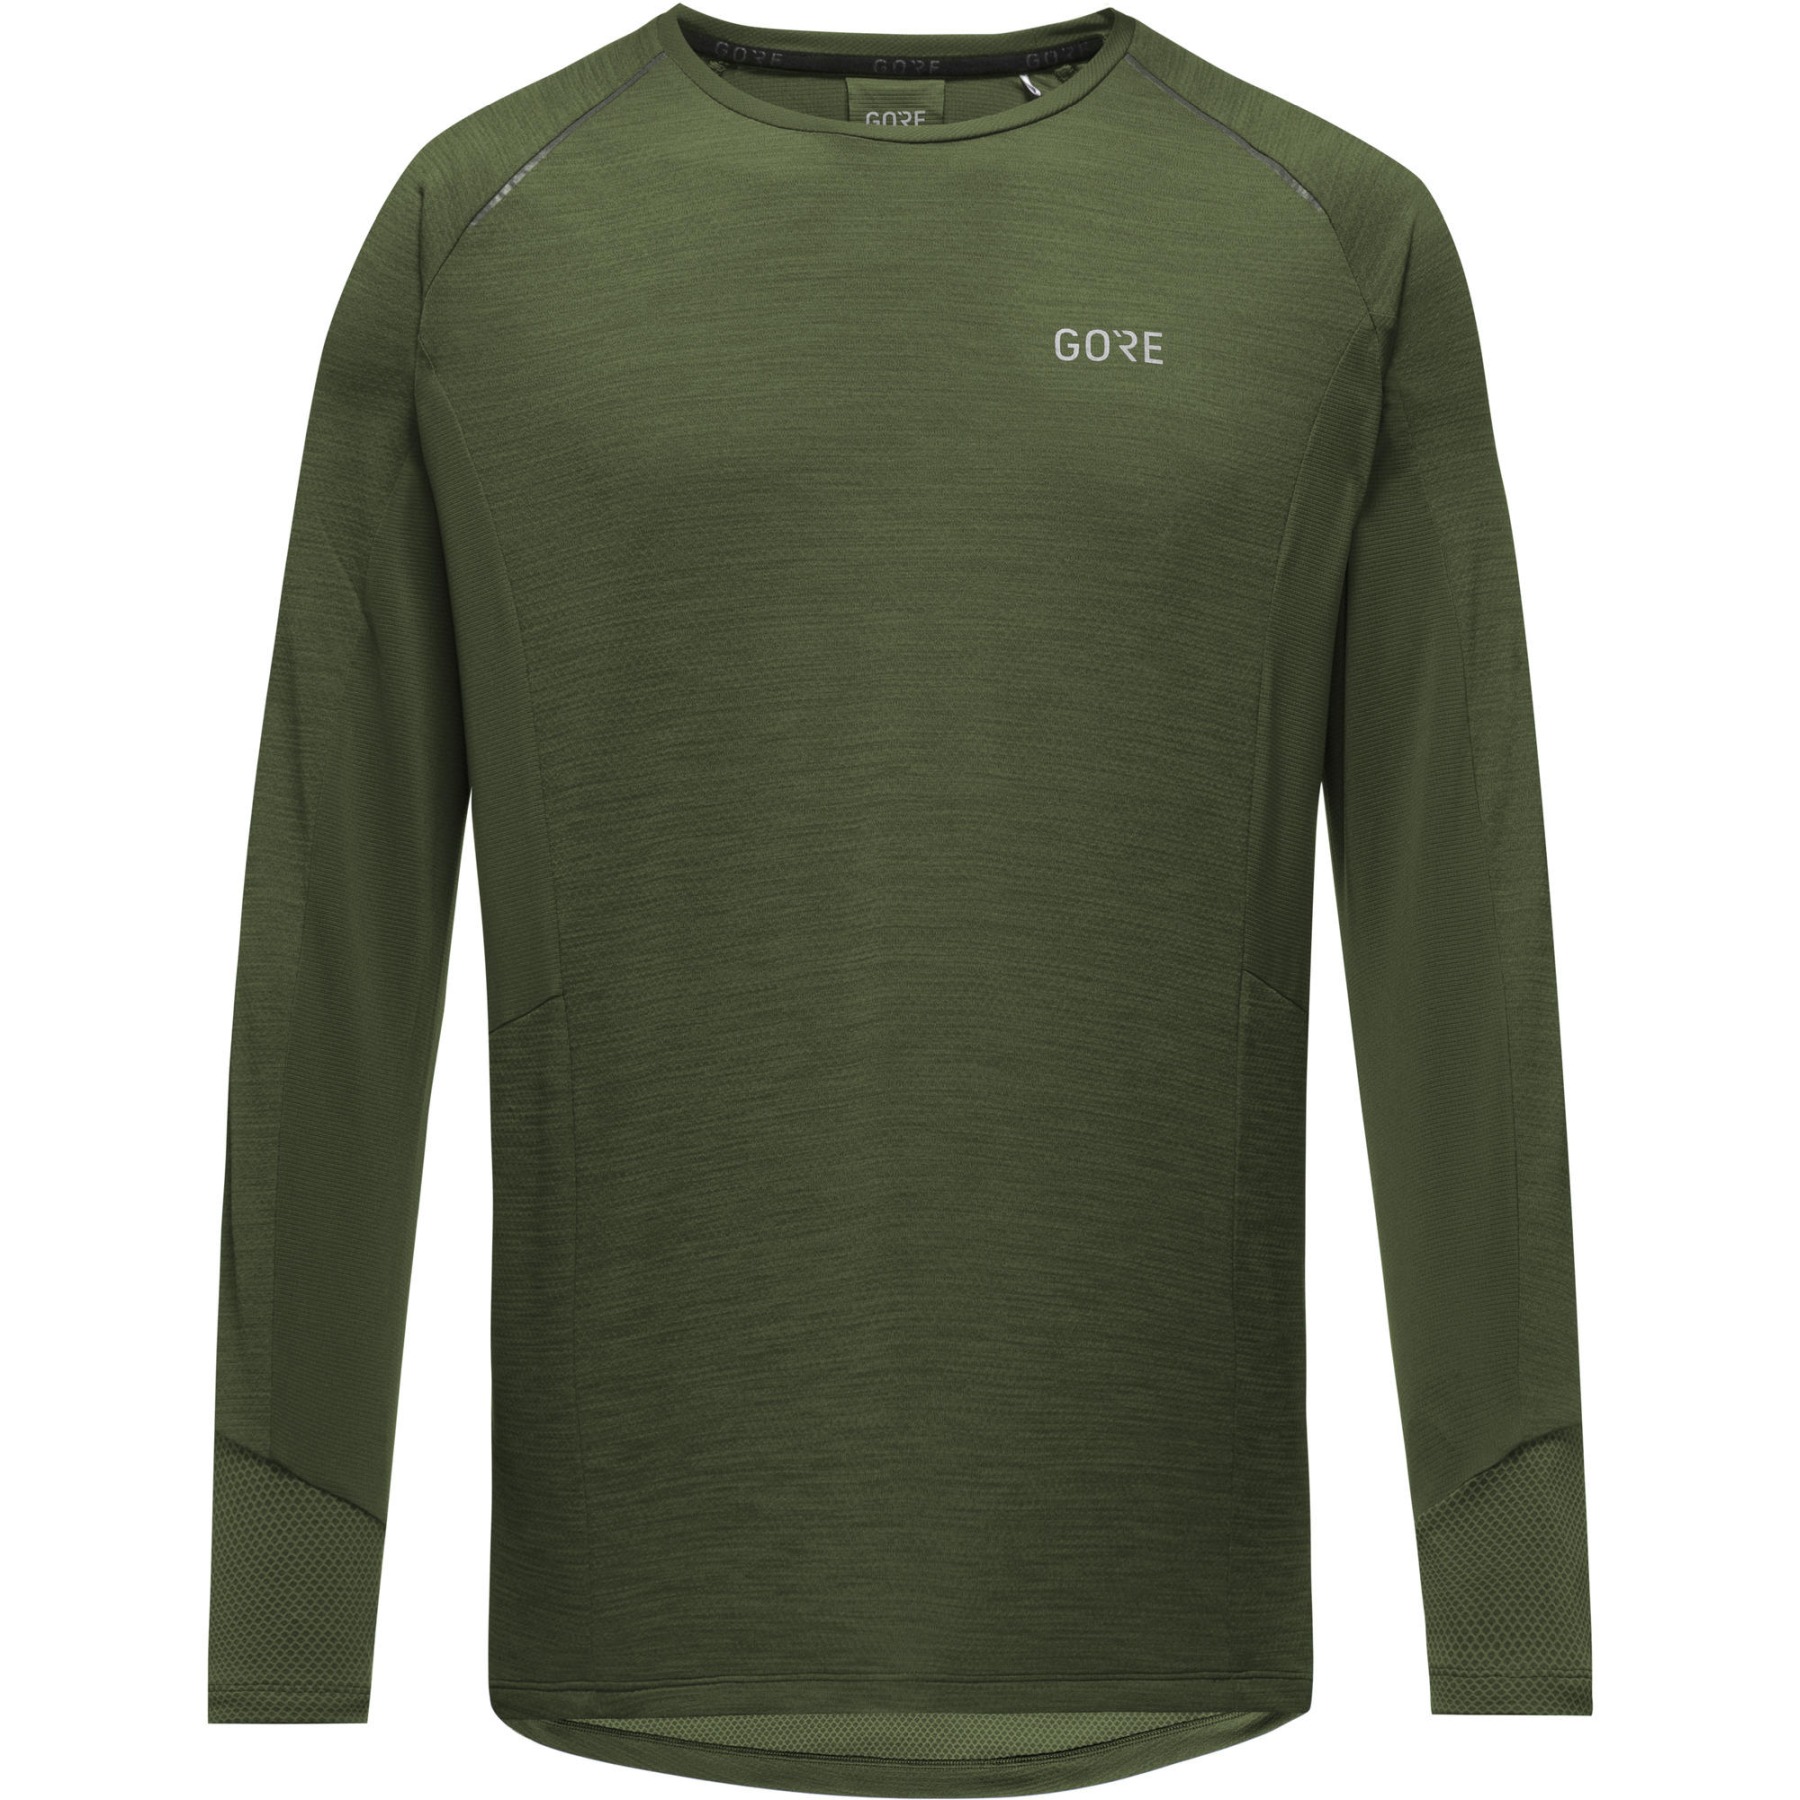 Image of GOREWEAR Energetic Longsleeve Shirt Men - utility green BH00